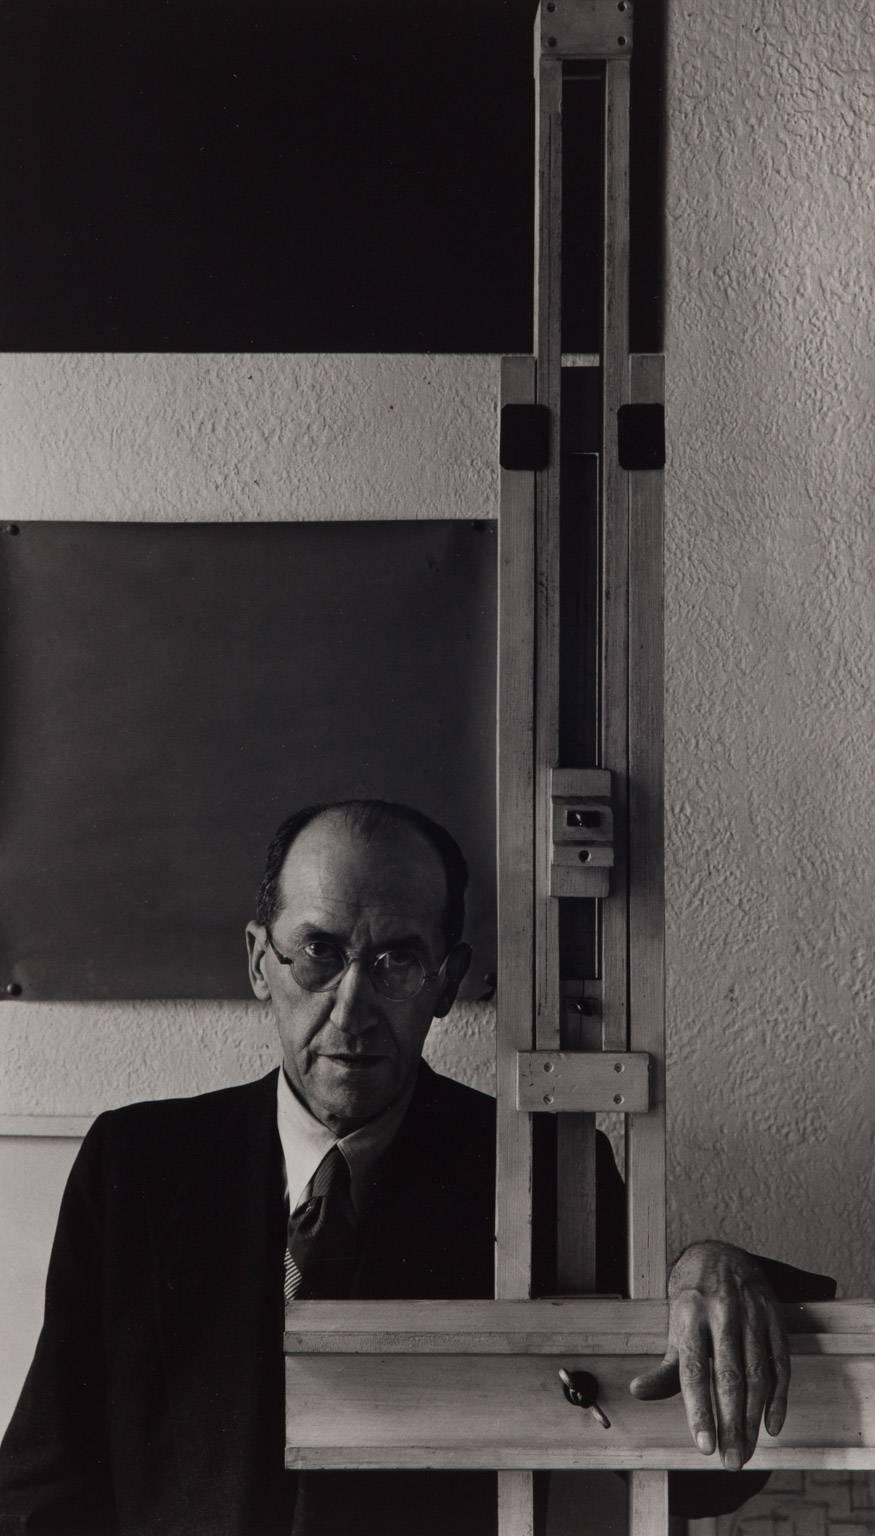 Arnold Newman Portrait Photograph - Piet Mondrian, New York City, NY, 1942